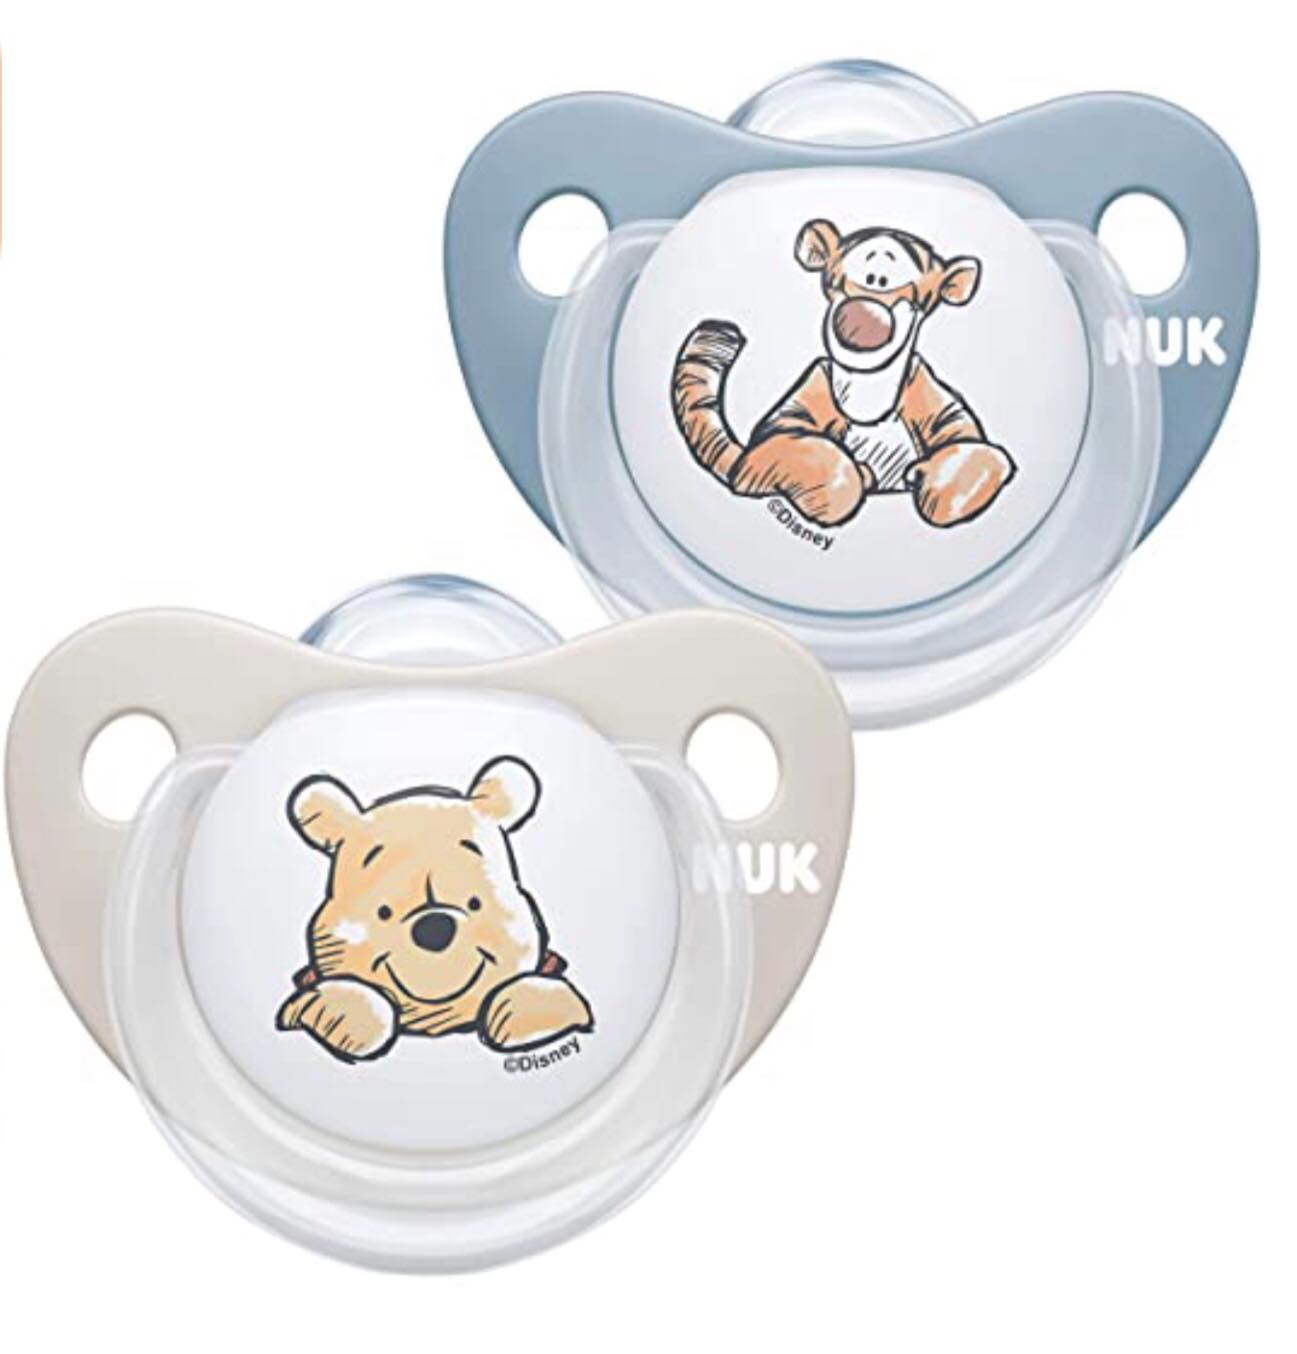 Nuk Disney Pooh หมีพู ของแท้ (Made in Germany) จุกนมหลอกซิลิโคน ฟันไม่เก สำหรับเด็ก 0-6 เดือน 1 กล่องบรรจุ 2 ชิ้น ไมโครเวฟฆ่าเชื้อได้ นำเข้าจากเยอรมัน  สีวัสดุ สีเทา